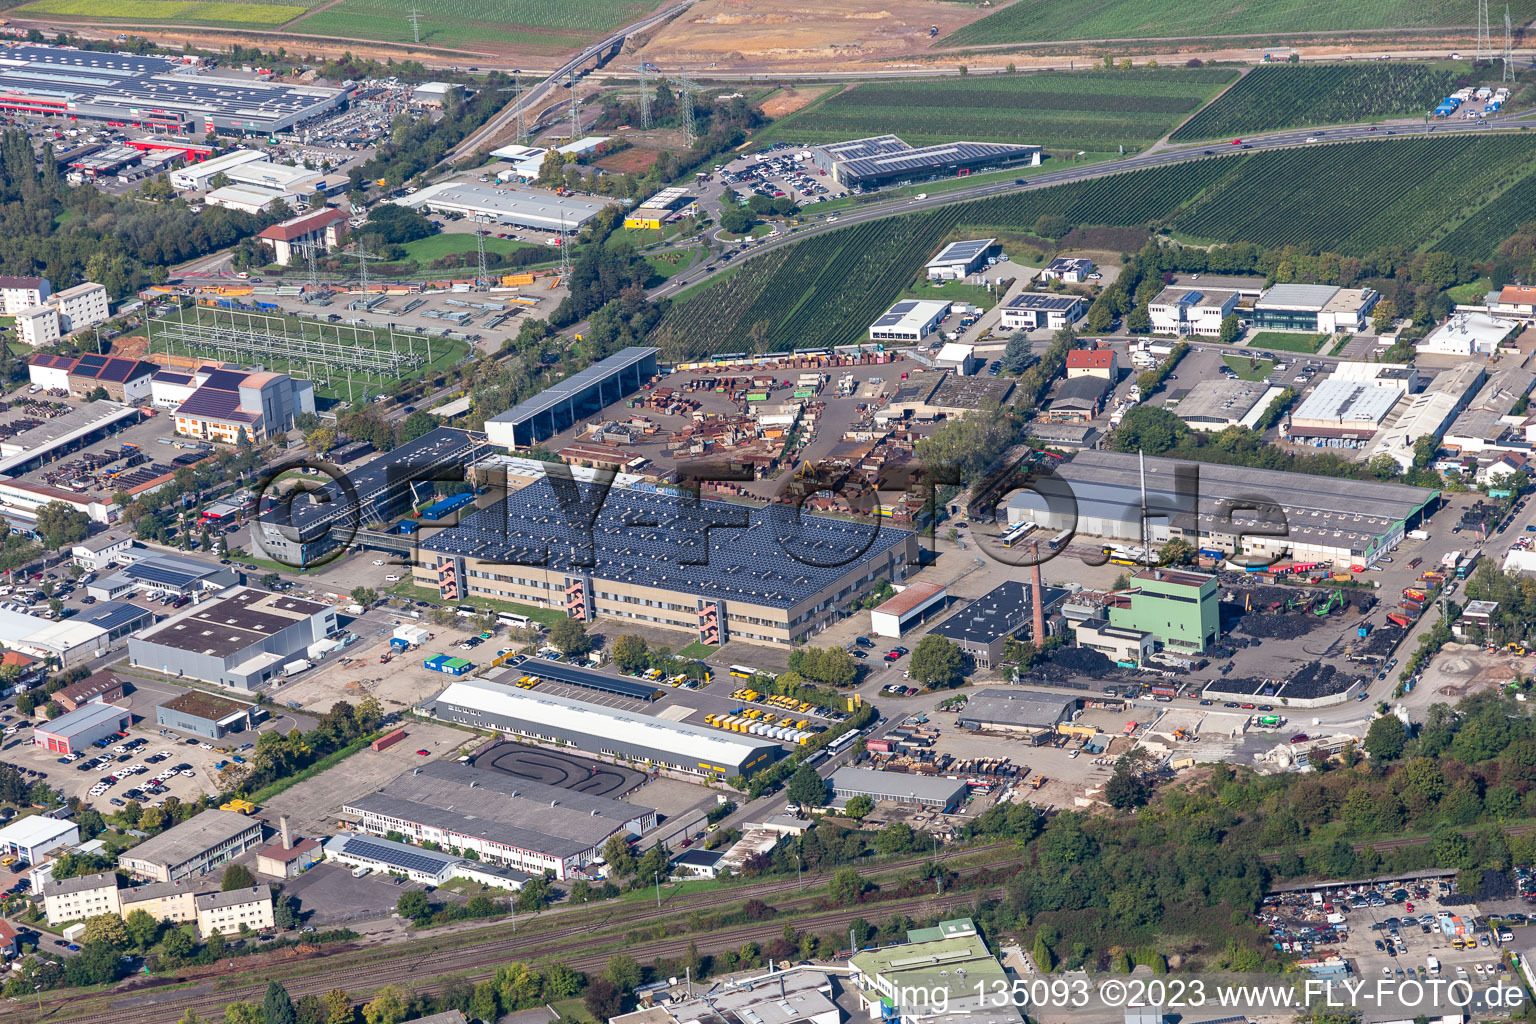 Michelin Reifenwerk AG in Landau in der Pfalz in the state Rhineland-Palatinate, Germany